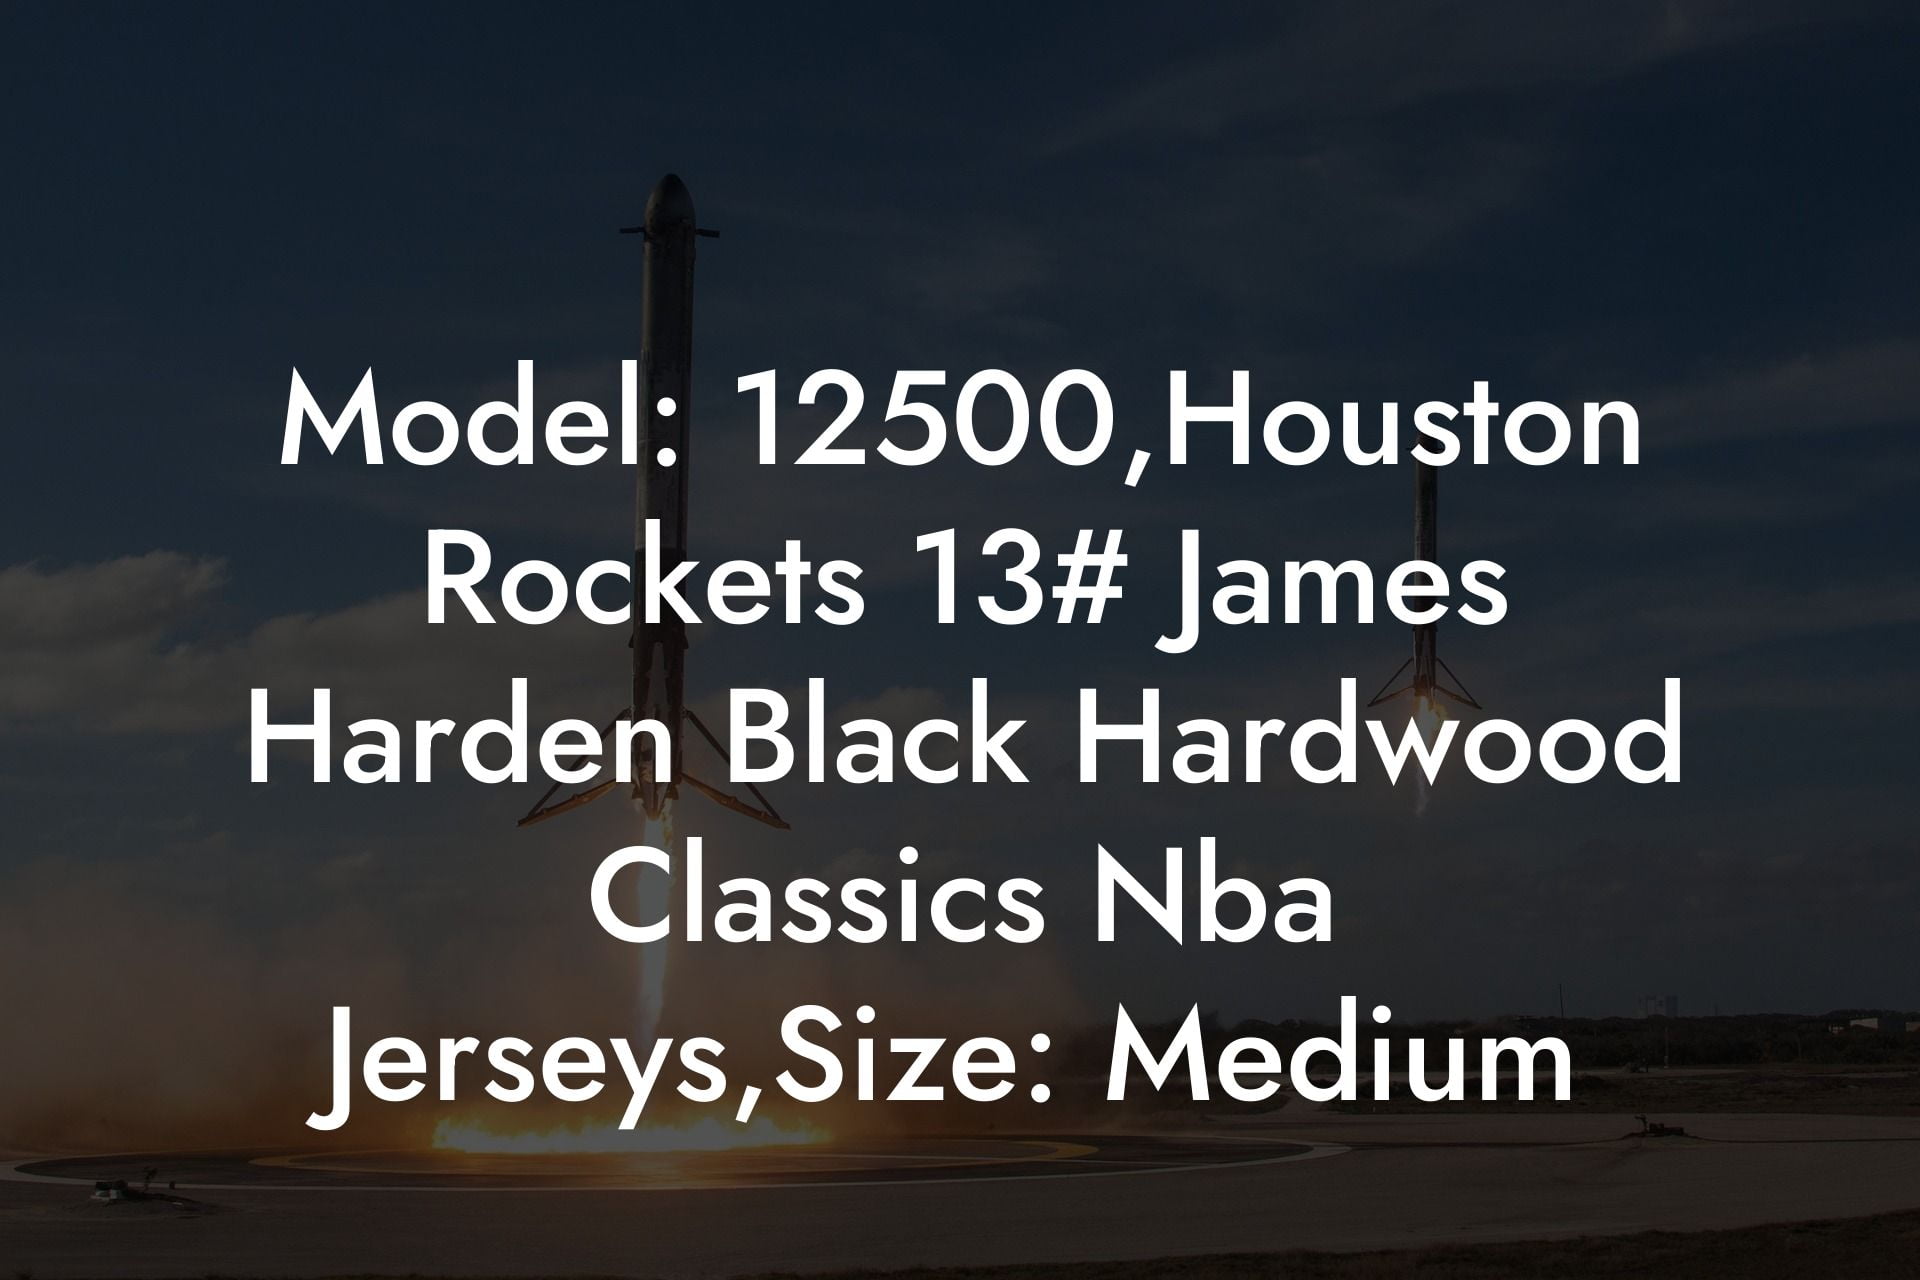 Model: 12500,Houston Rockets 13# James Harden Black Hardwood Classics Nba Jerseys,Size: Medium